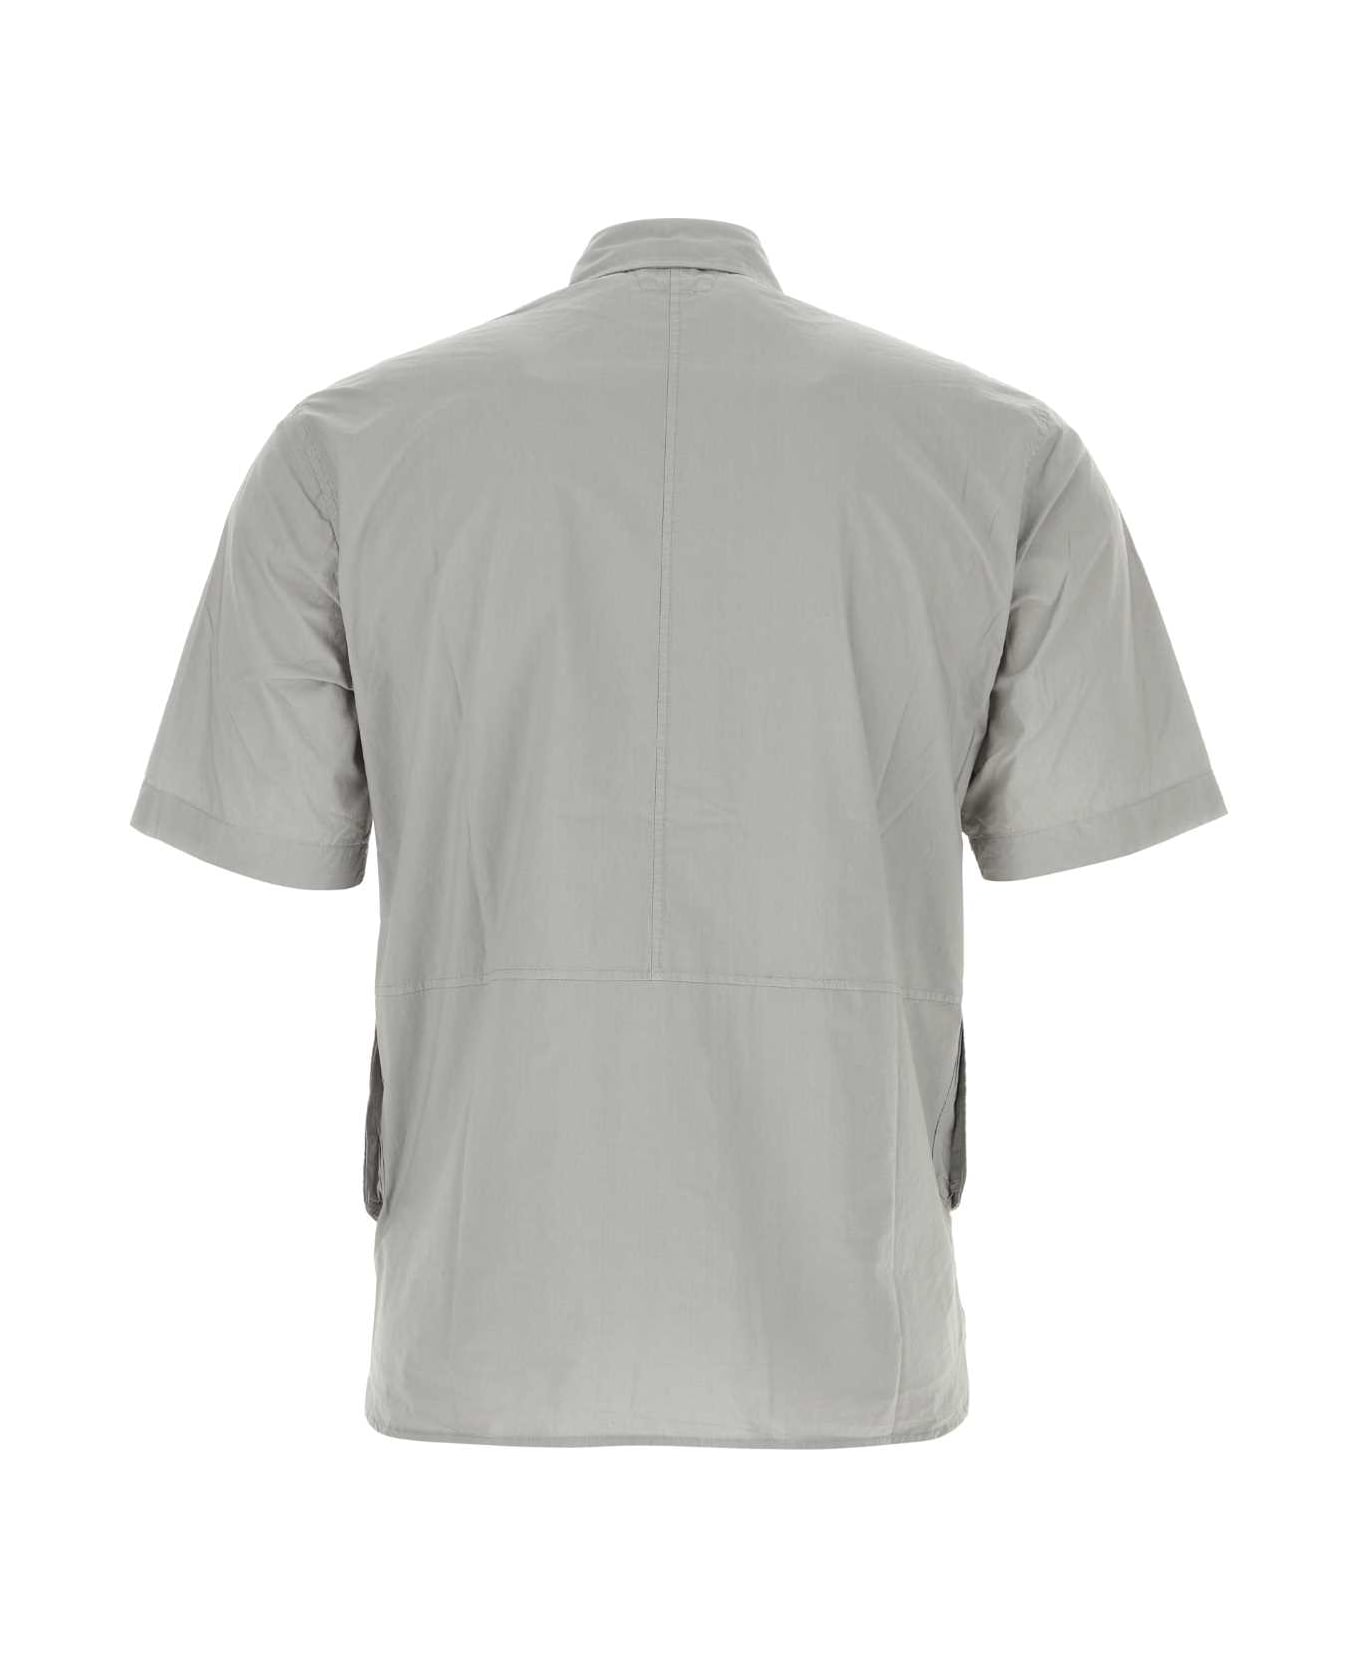 C.P. Company Grey Cotton Shirt - DRIZZLE